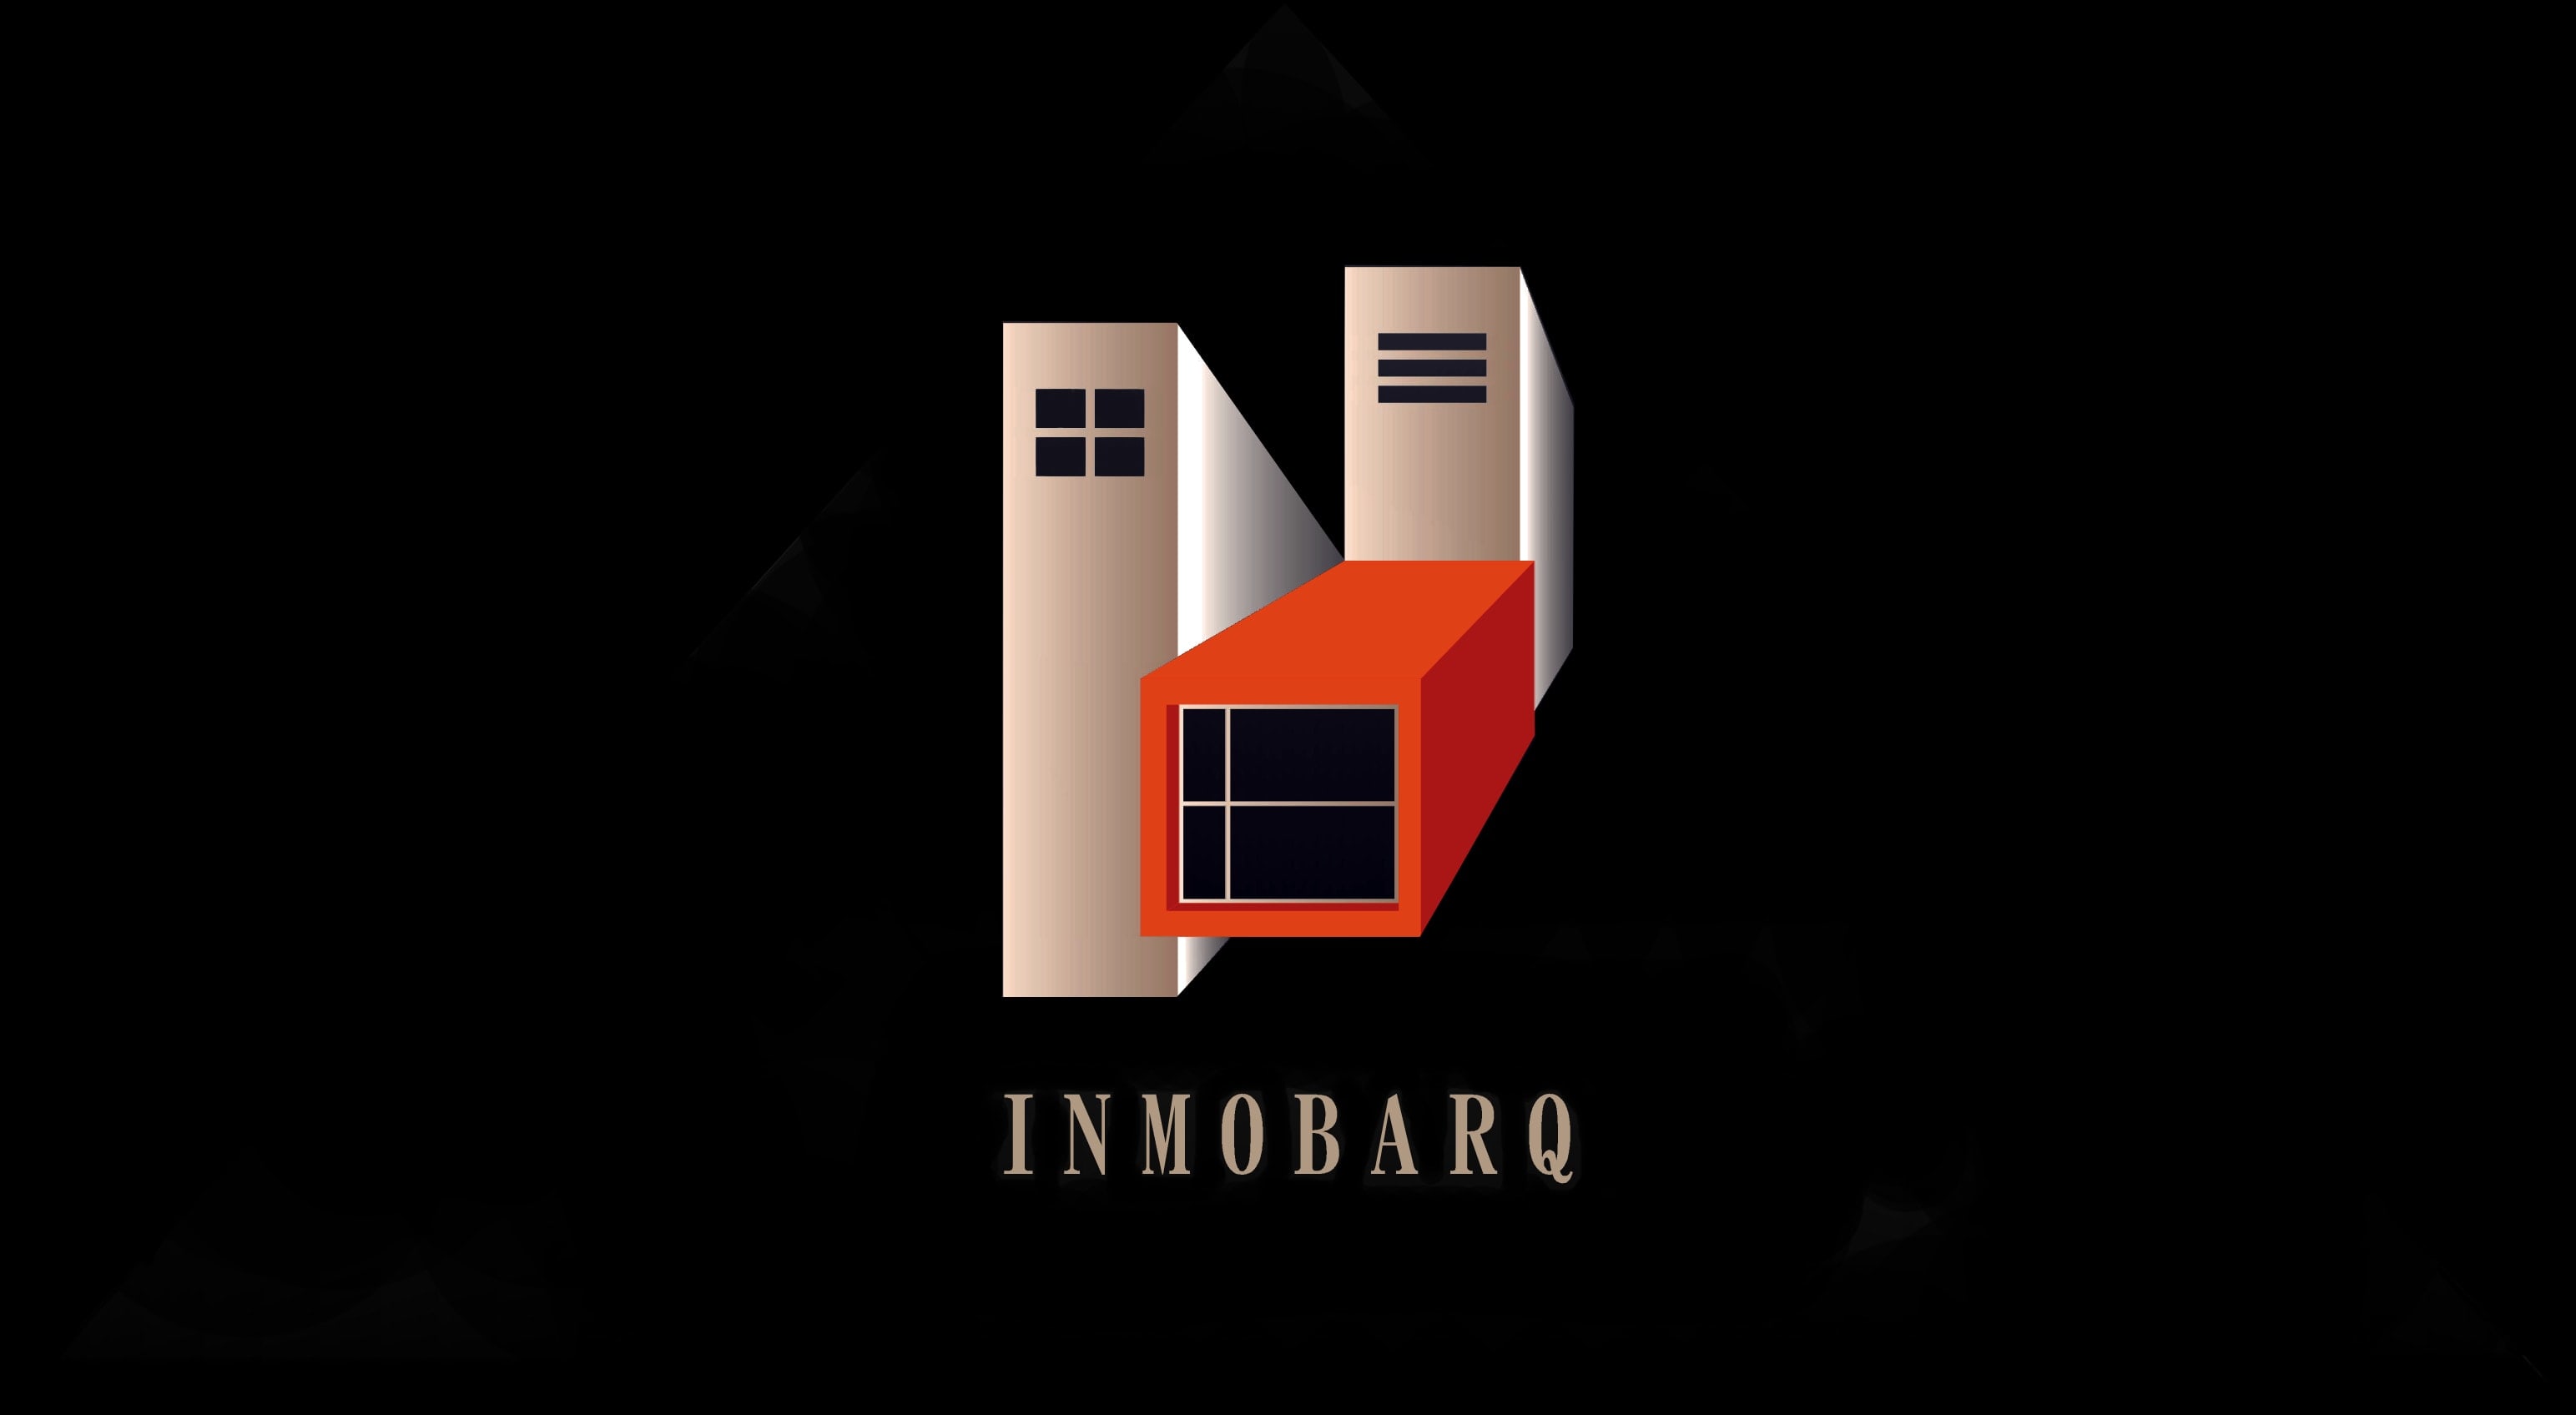 Inmobarq